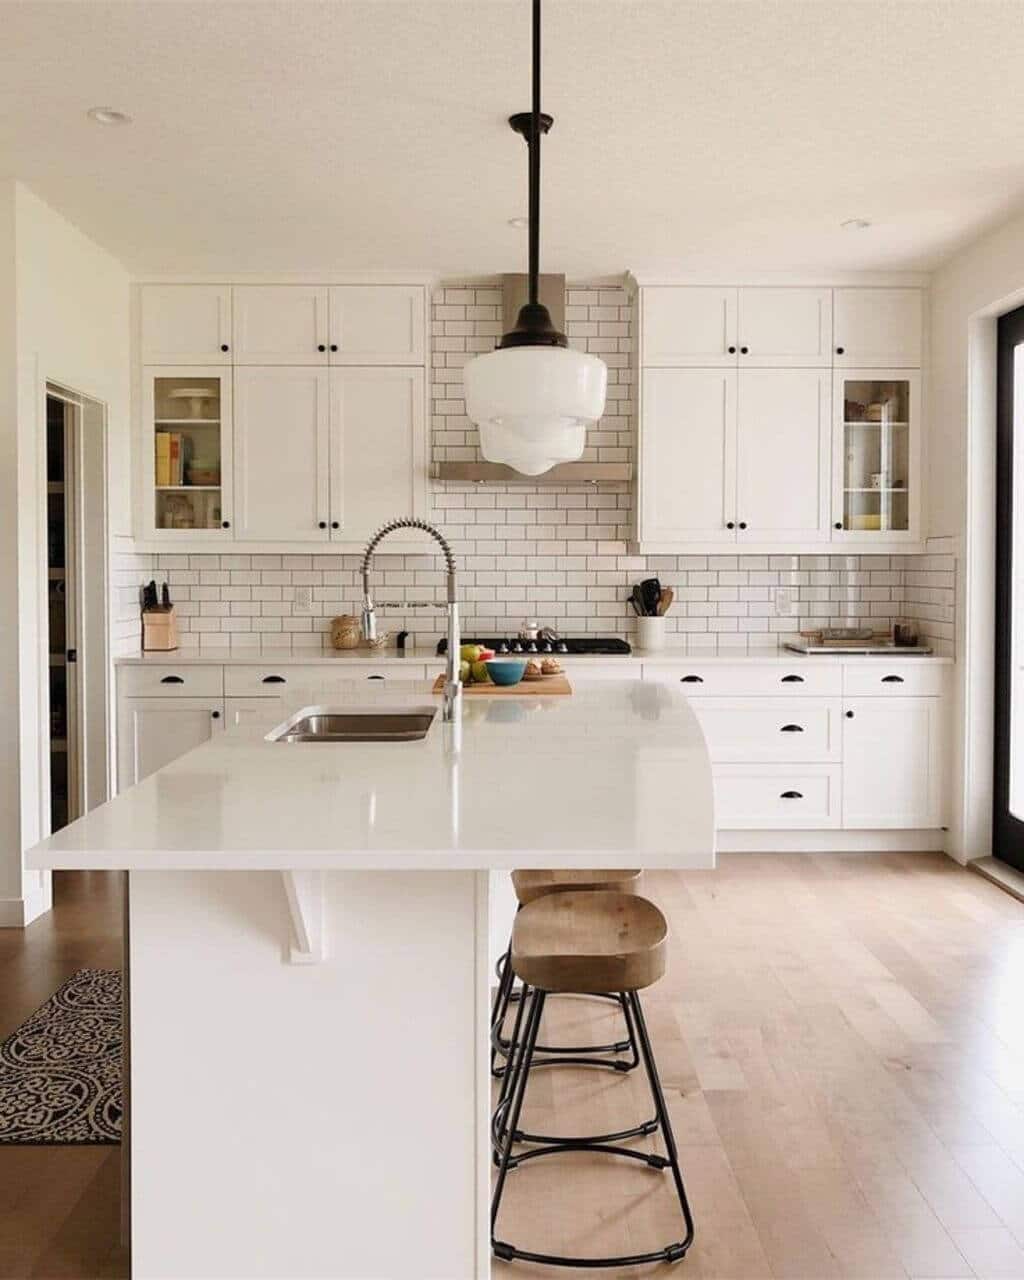 Nostalgic White Tiles cabinet kitchen backsplash idea